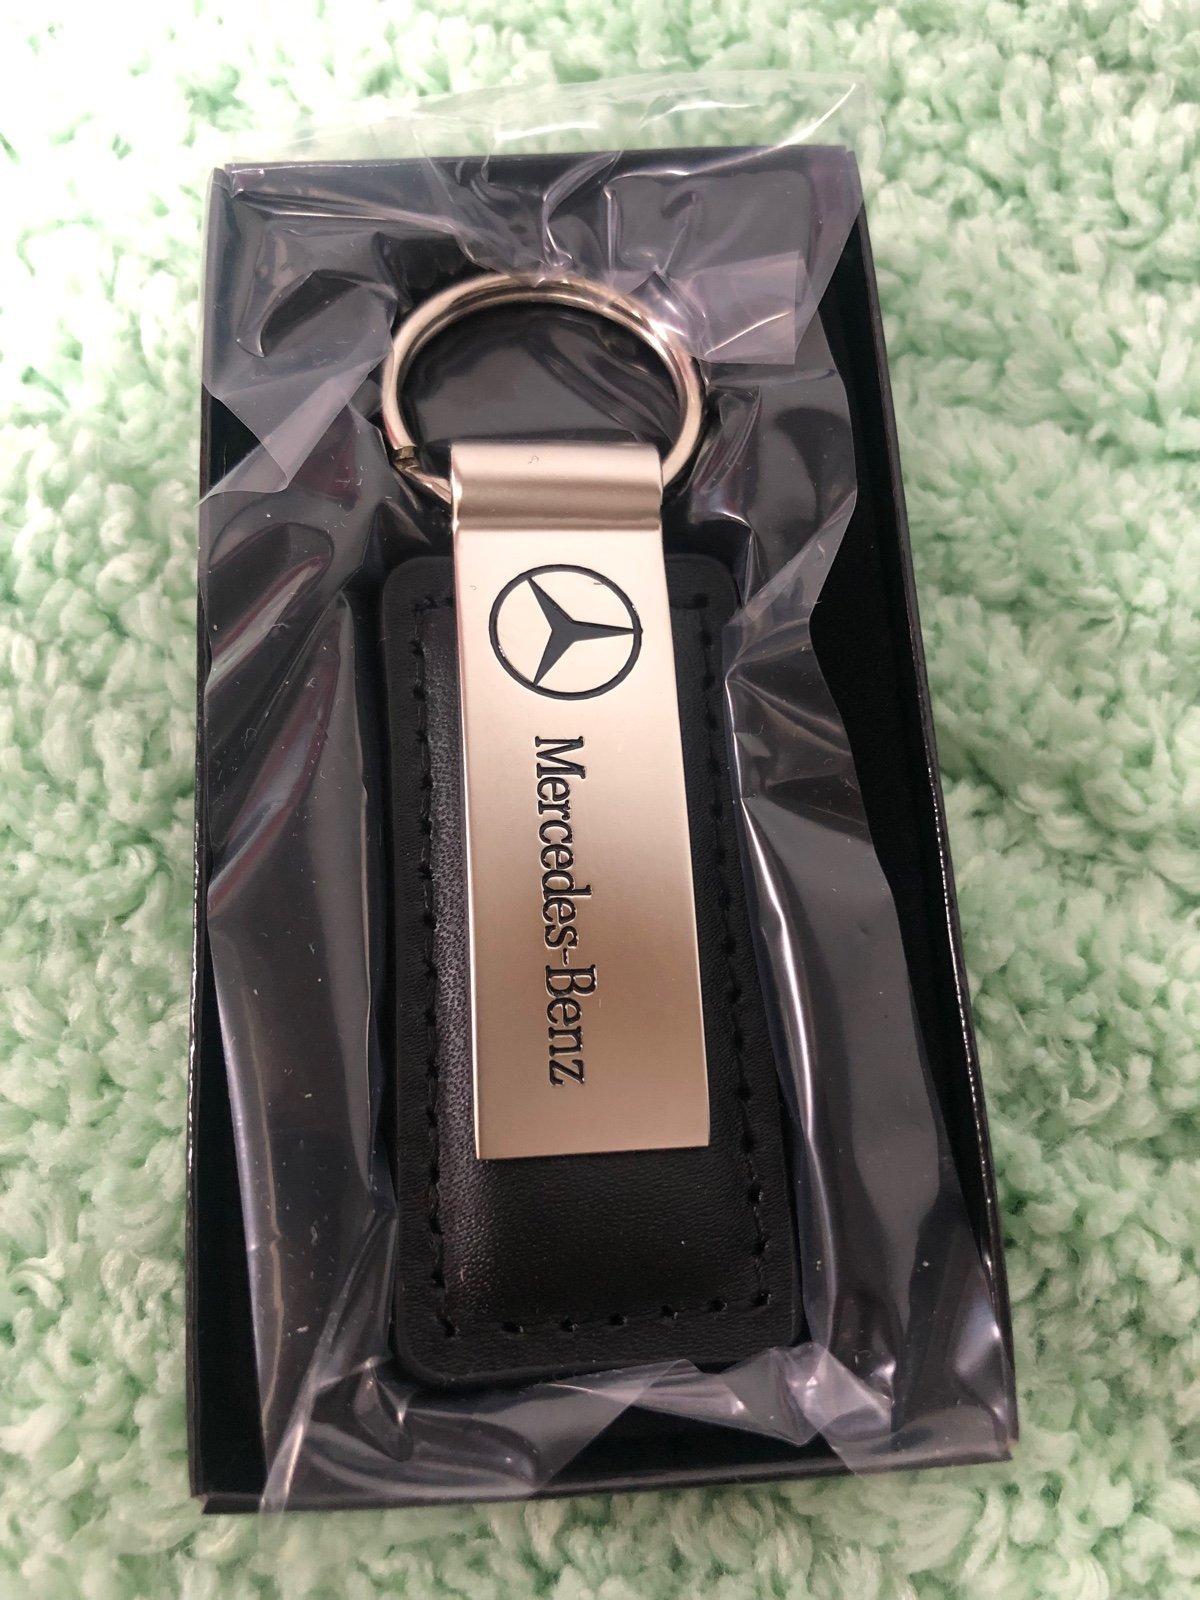 Mercedes Benz New key chain 604xJBJOy